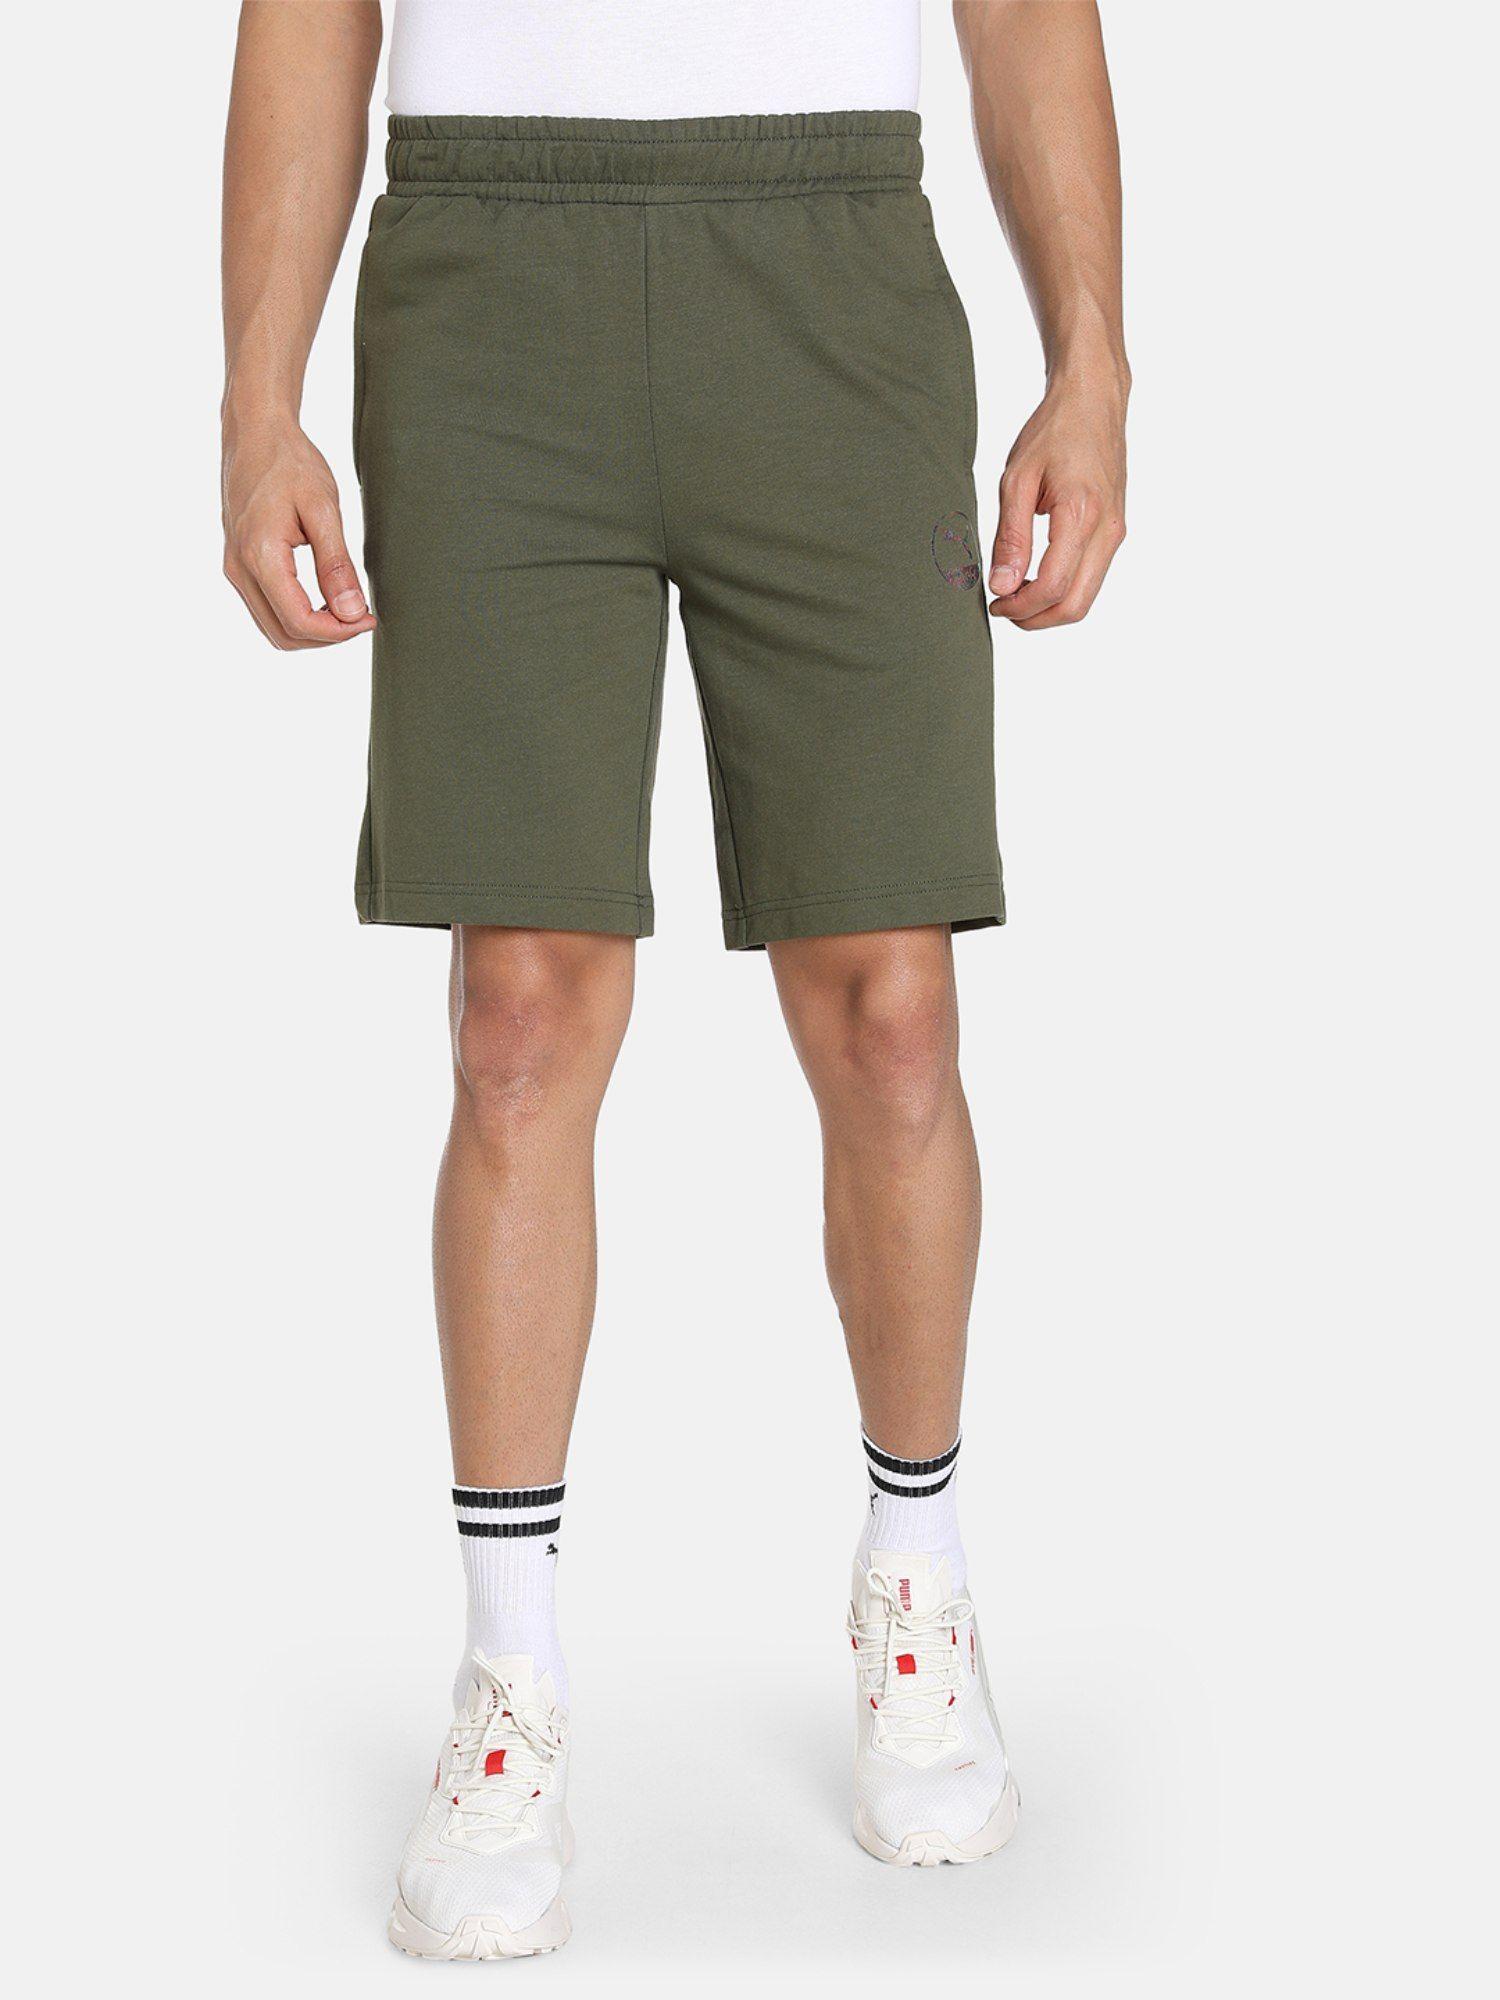 xone8-men-green-shorts